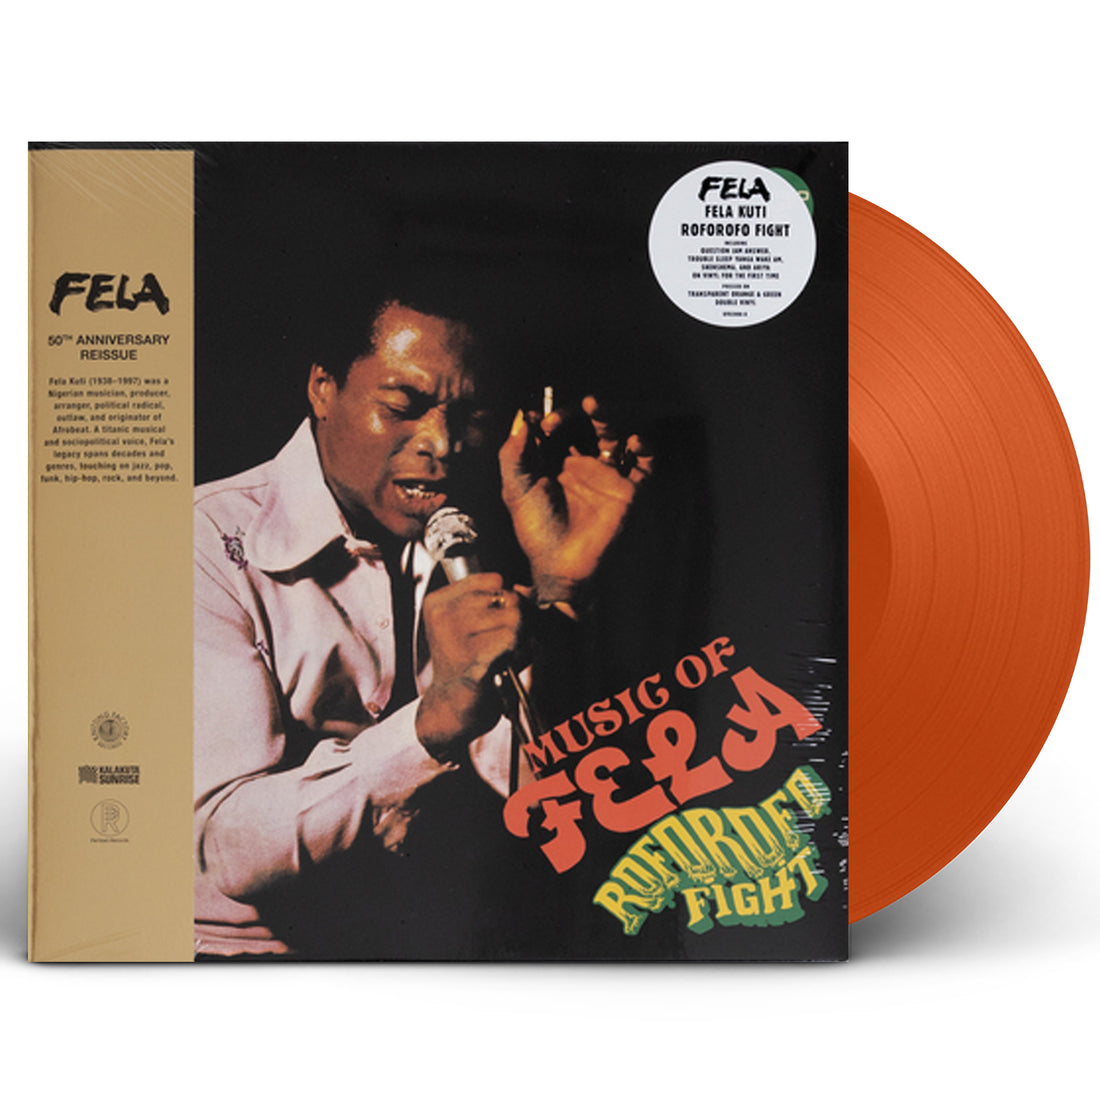 Fela Kuti "Roforofo Fight" (1972) LP Vinyl 50th Anniversary Ed